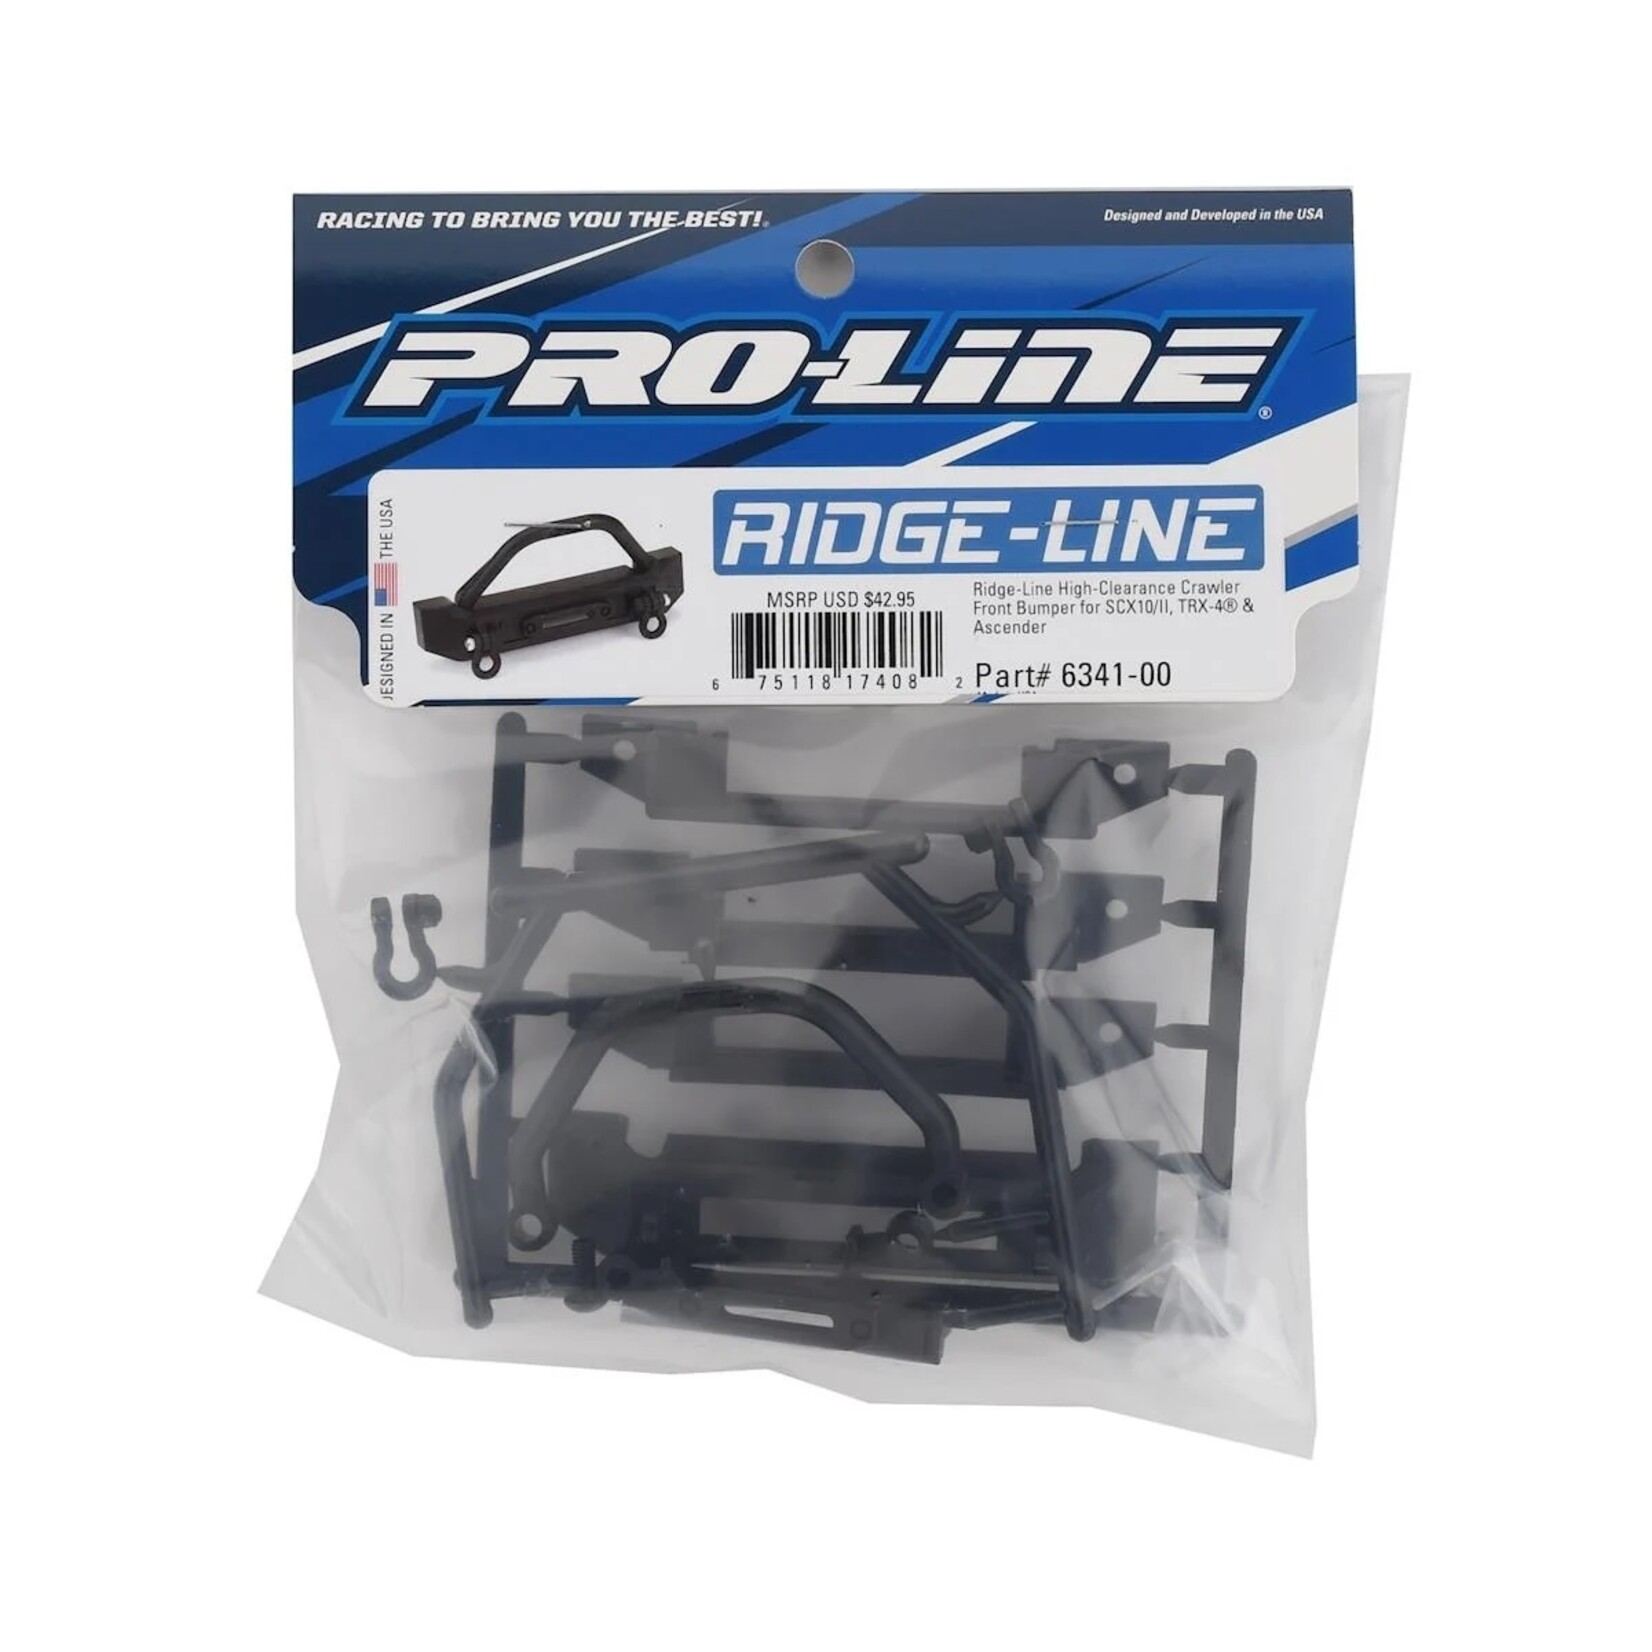 Pro-Line Pro-Line Ridge-Line High-Clearance Crawler Front Bumper #6341-00